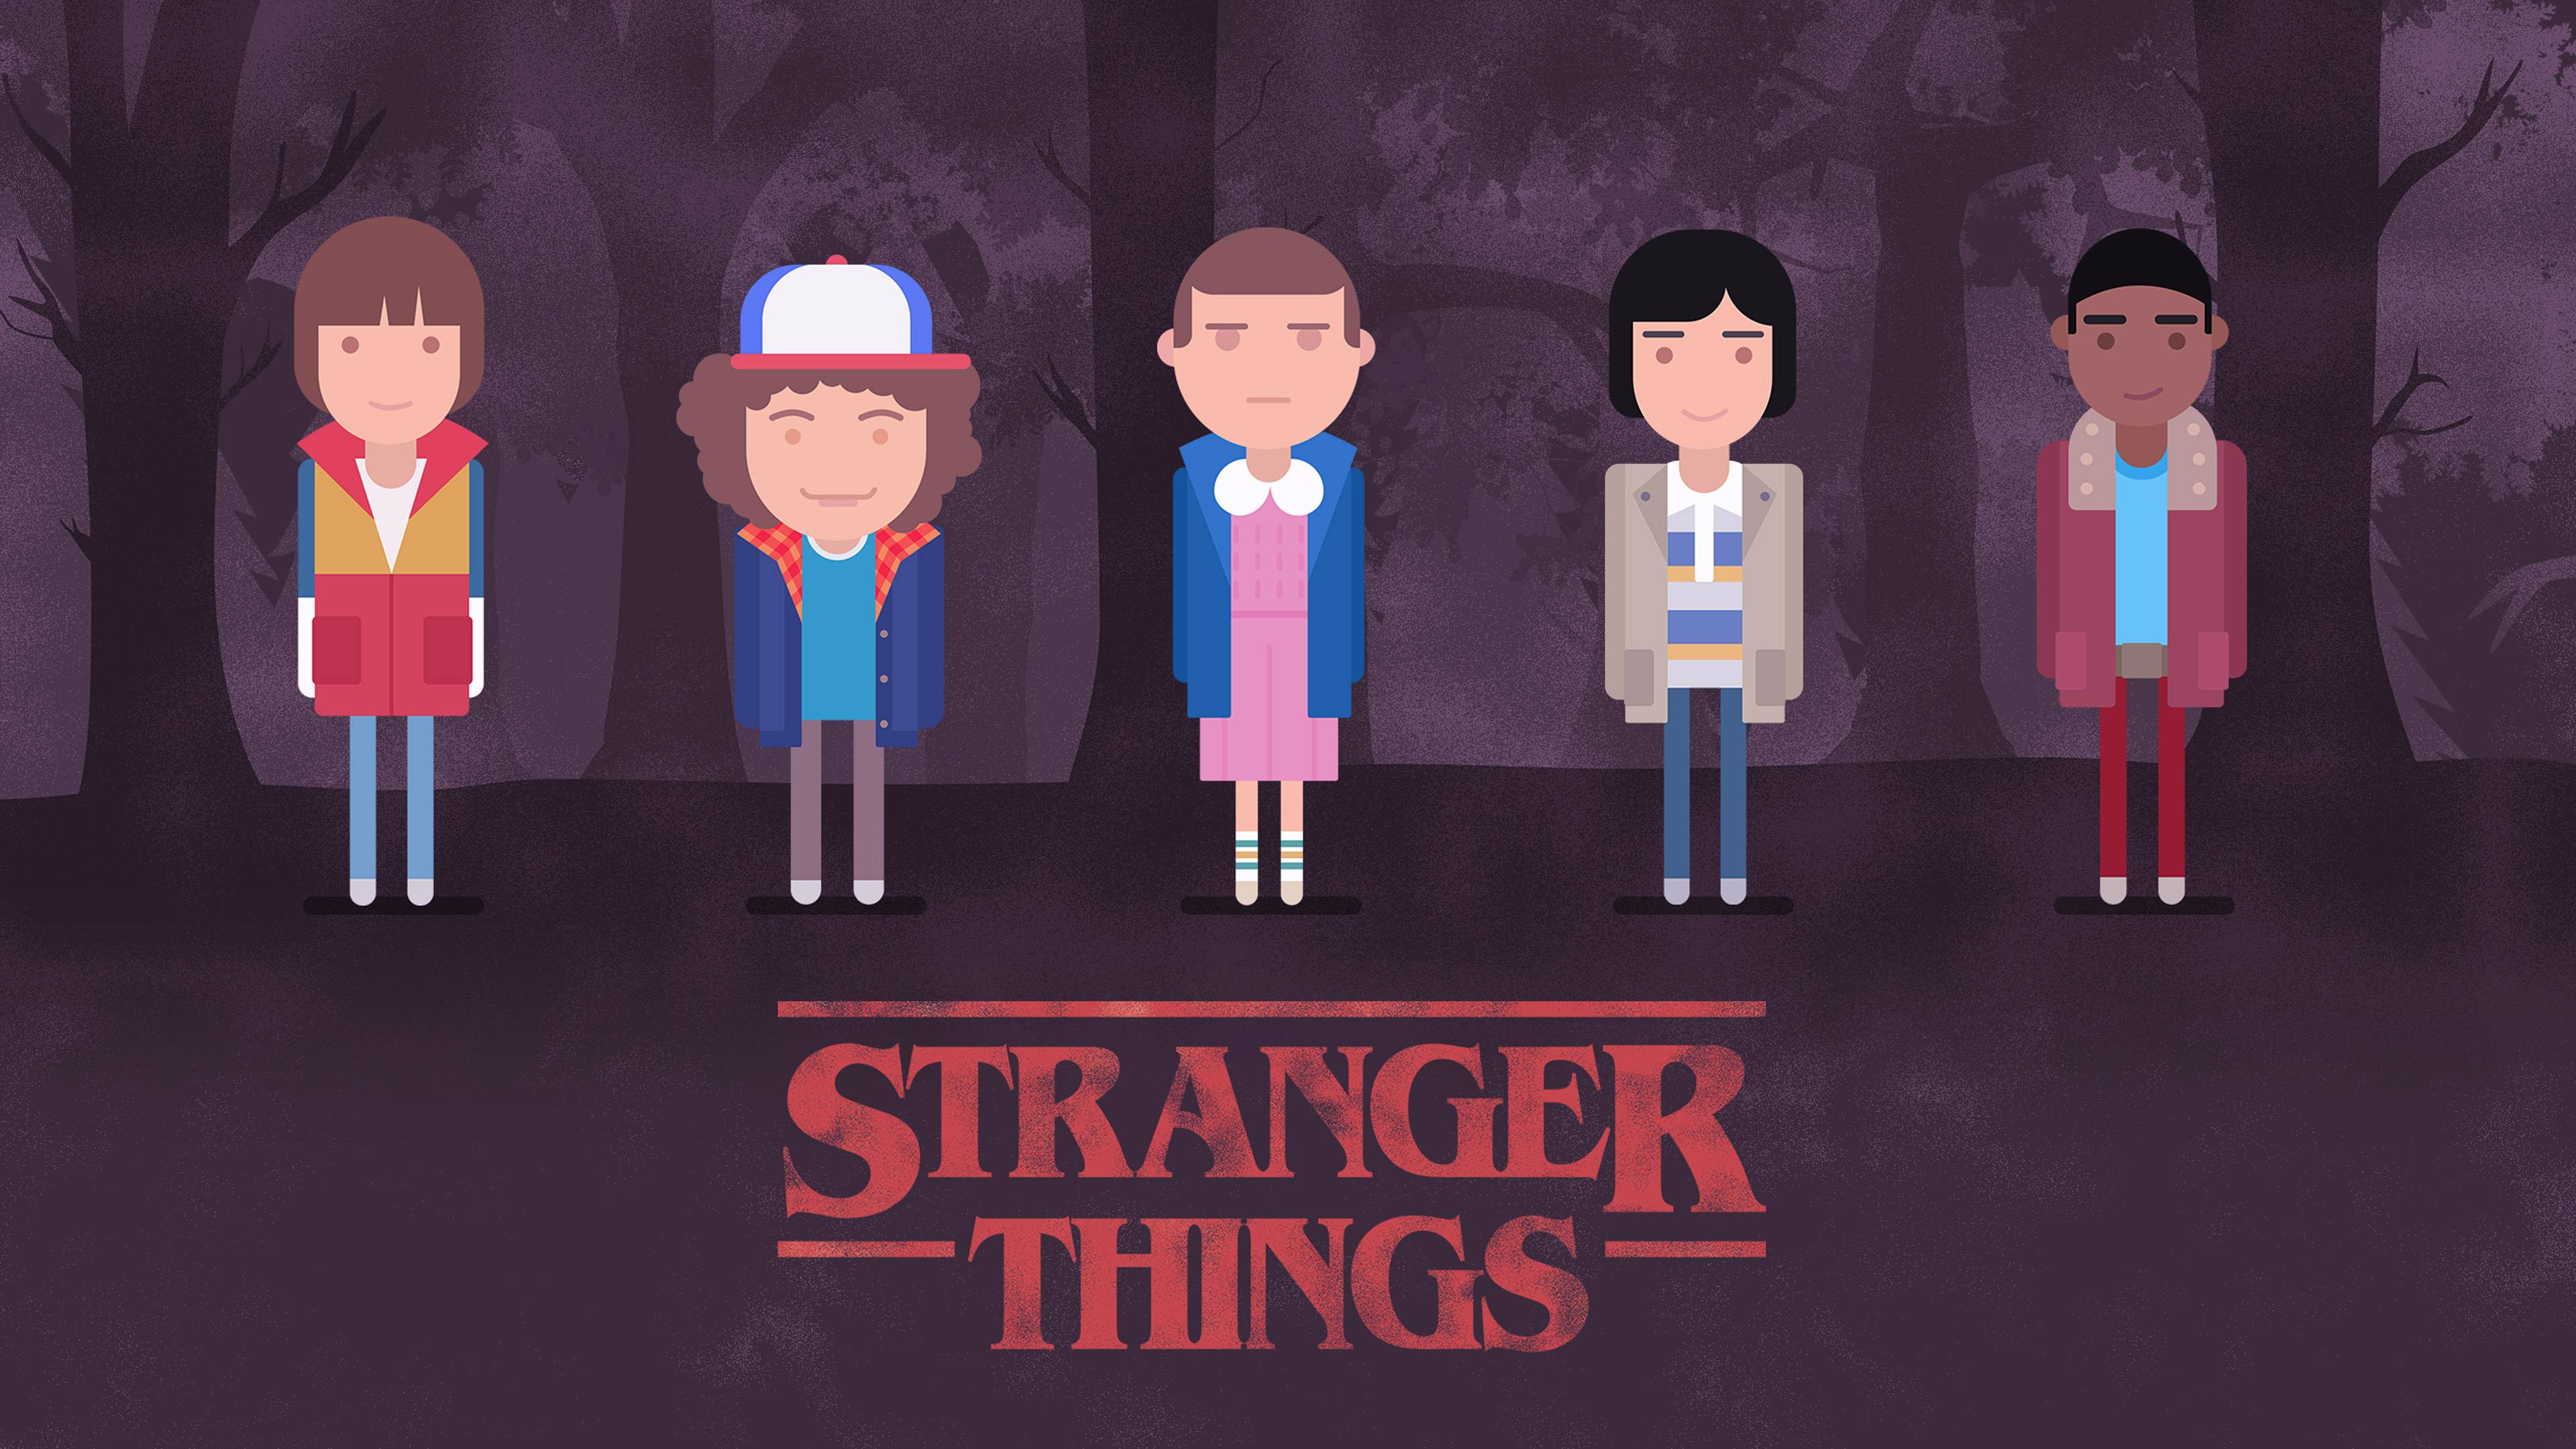 Stranger Things 4 HD Wallpapers Free download  PixelsTalkNet